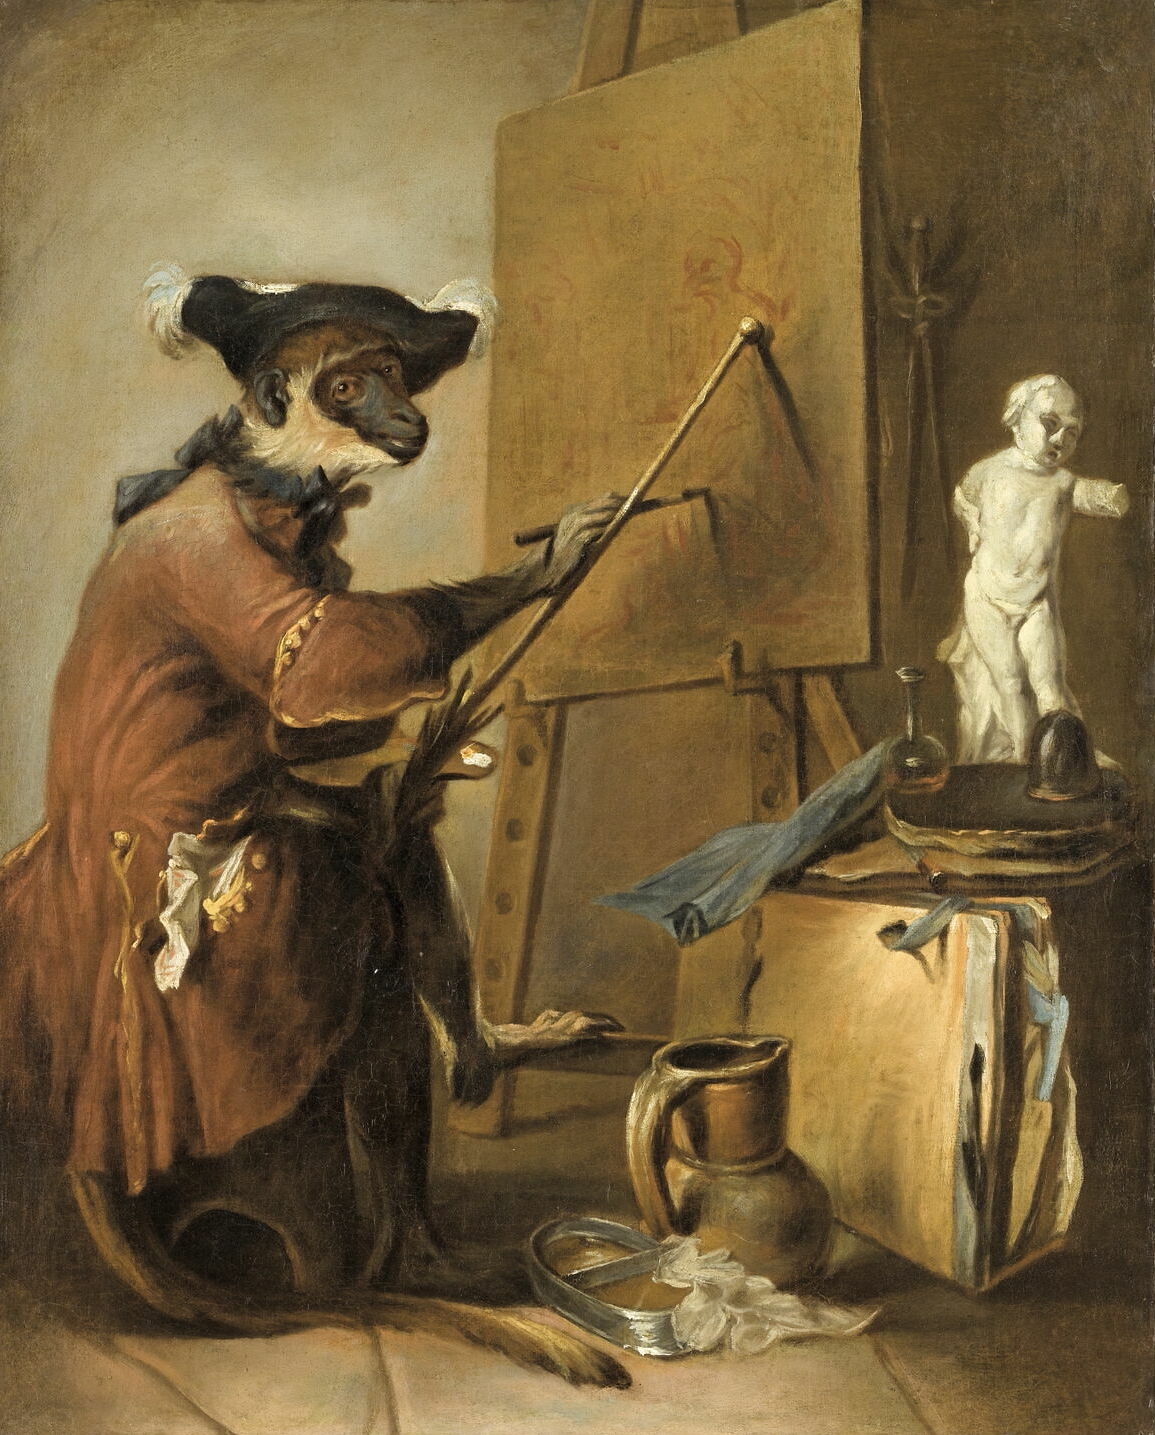 Jean-Baptiste Chardin, The Monkey Painter, 1739-1740, Louvre, Paris.